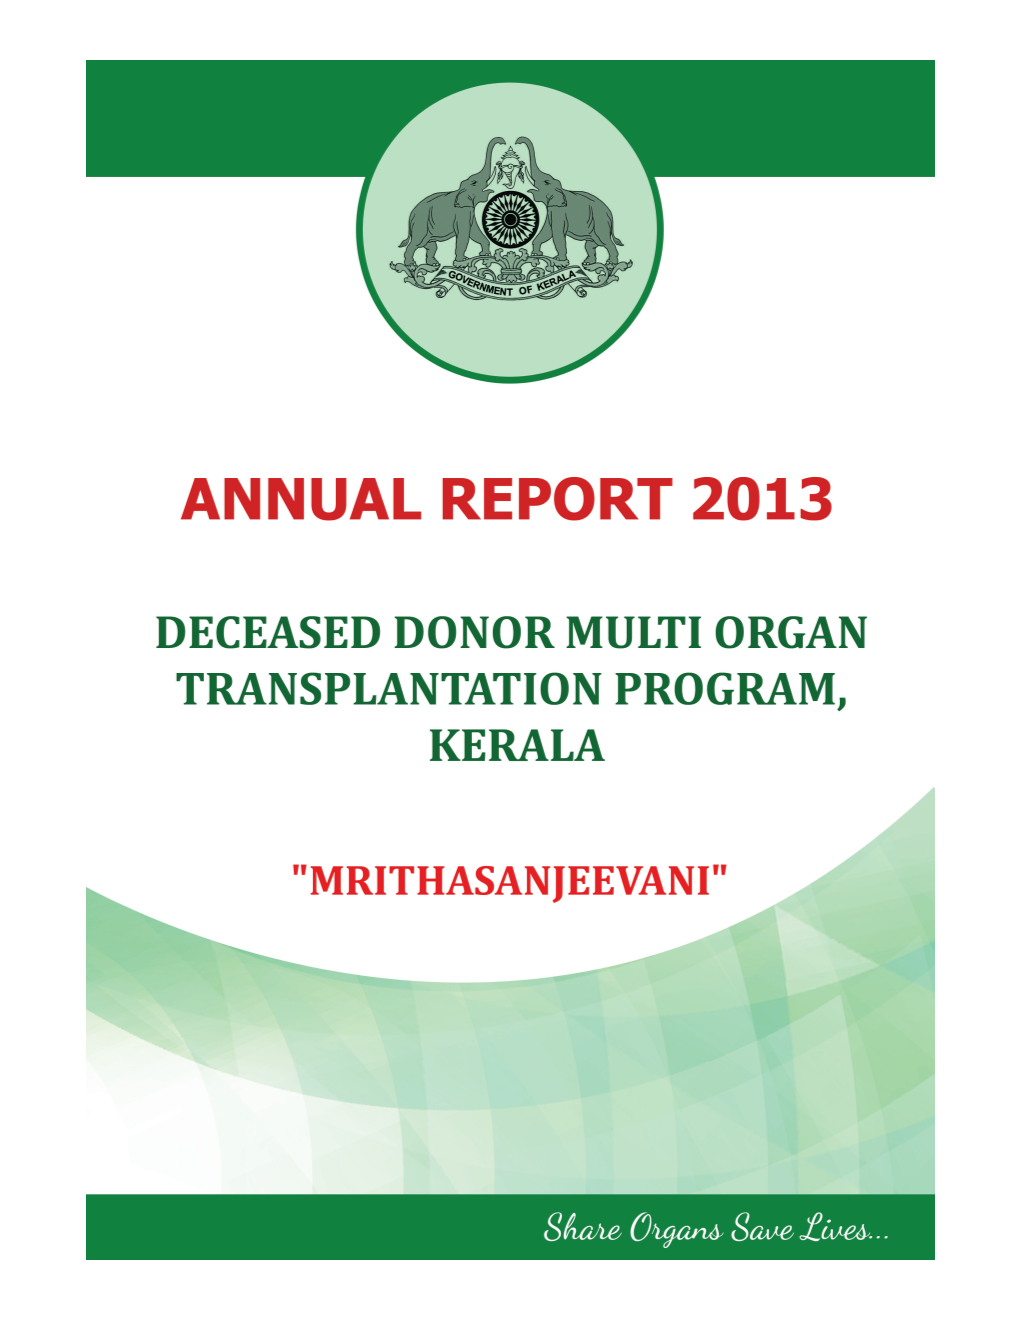 Annual Report from Kerala Organ Sharing Registry for the Year 2013, Kerala